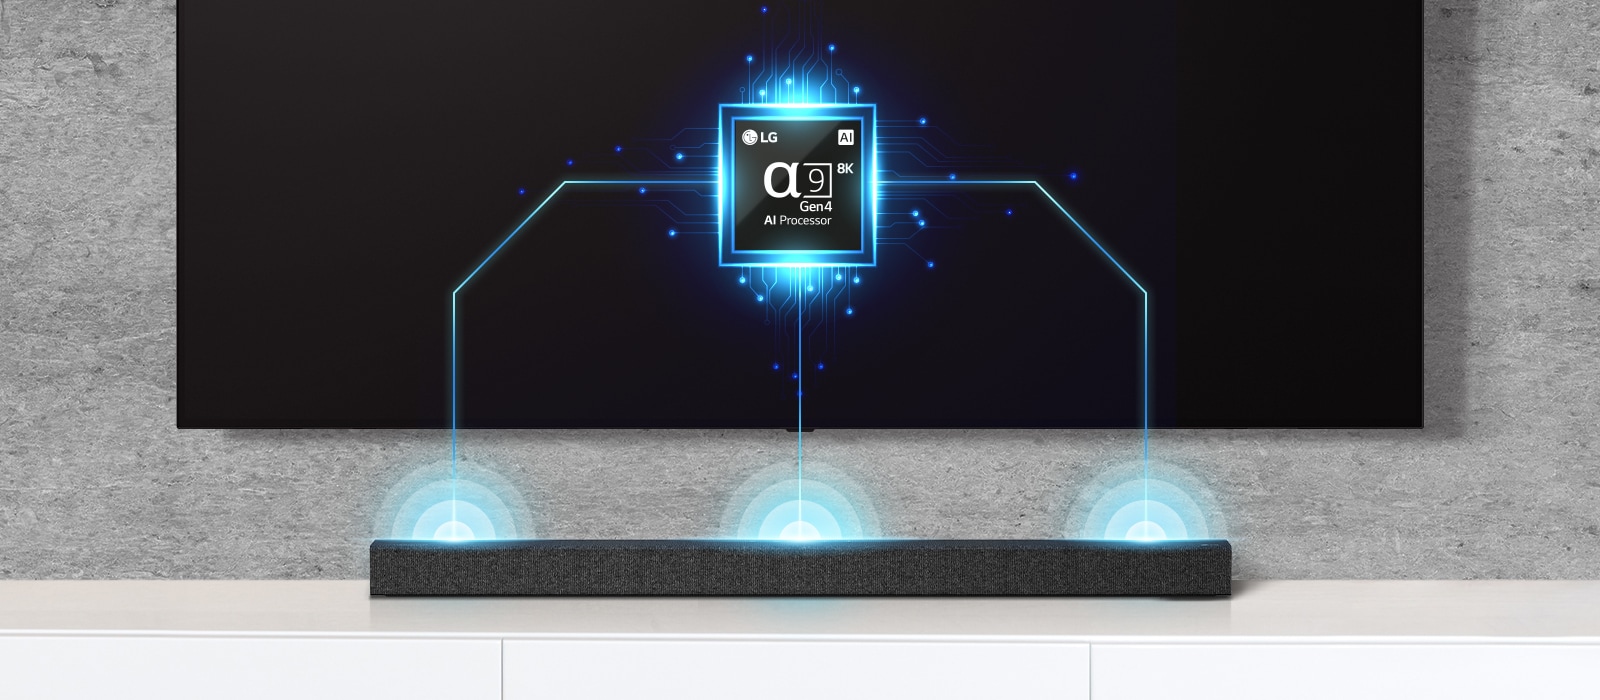 Upgrade Your Sound bar with LG’s AI Processor1